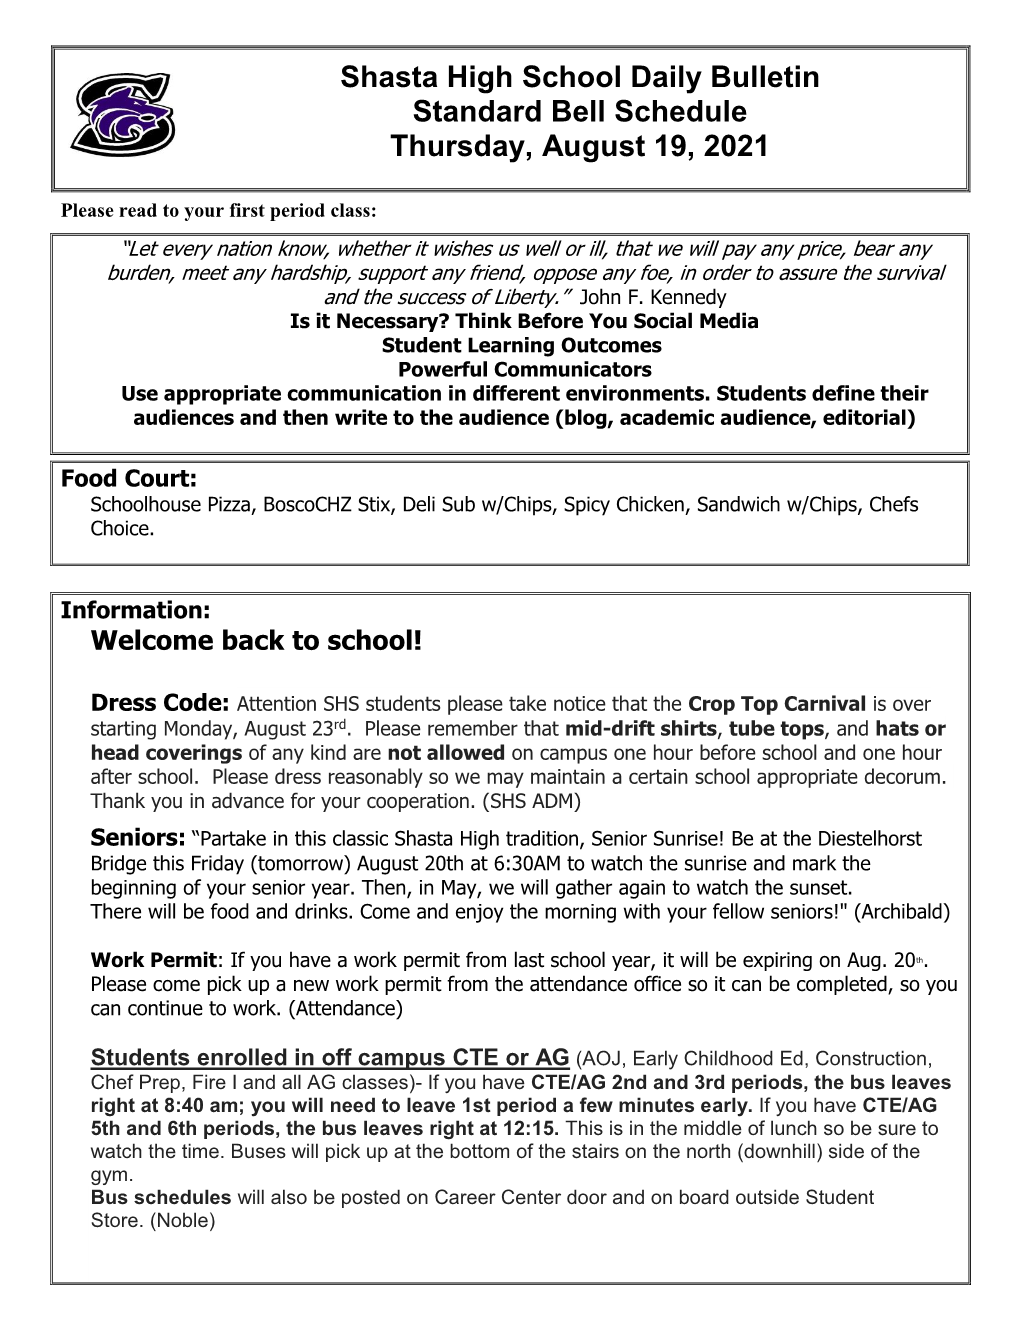 Shasta High School Daily Bulletin Standard Bell Schedule Thursday, August 19, 2021